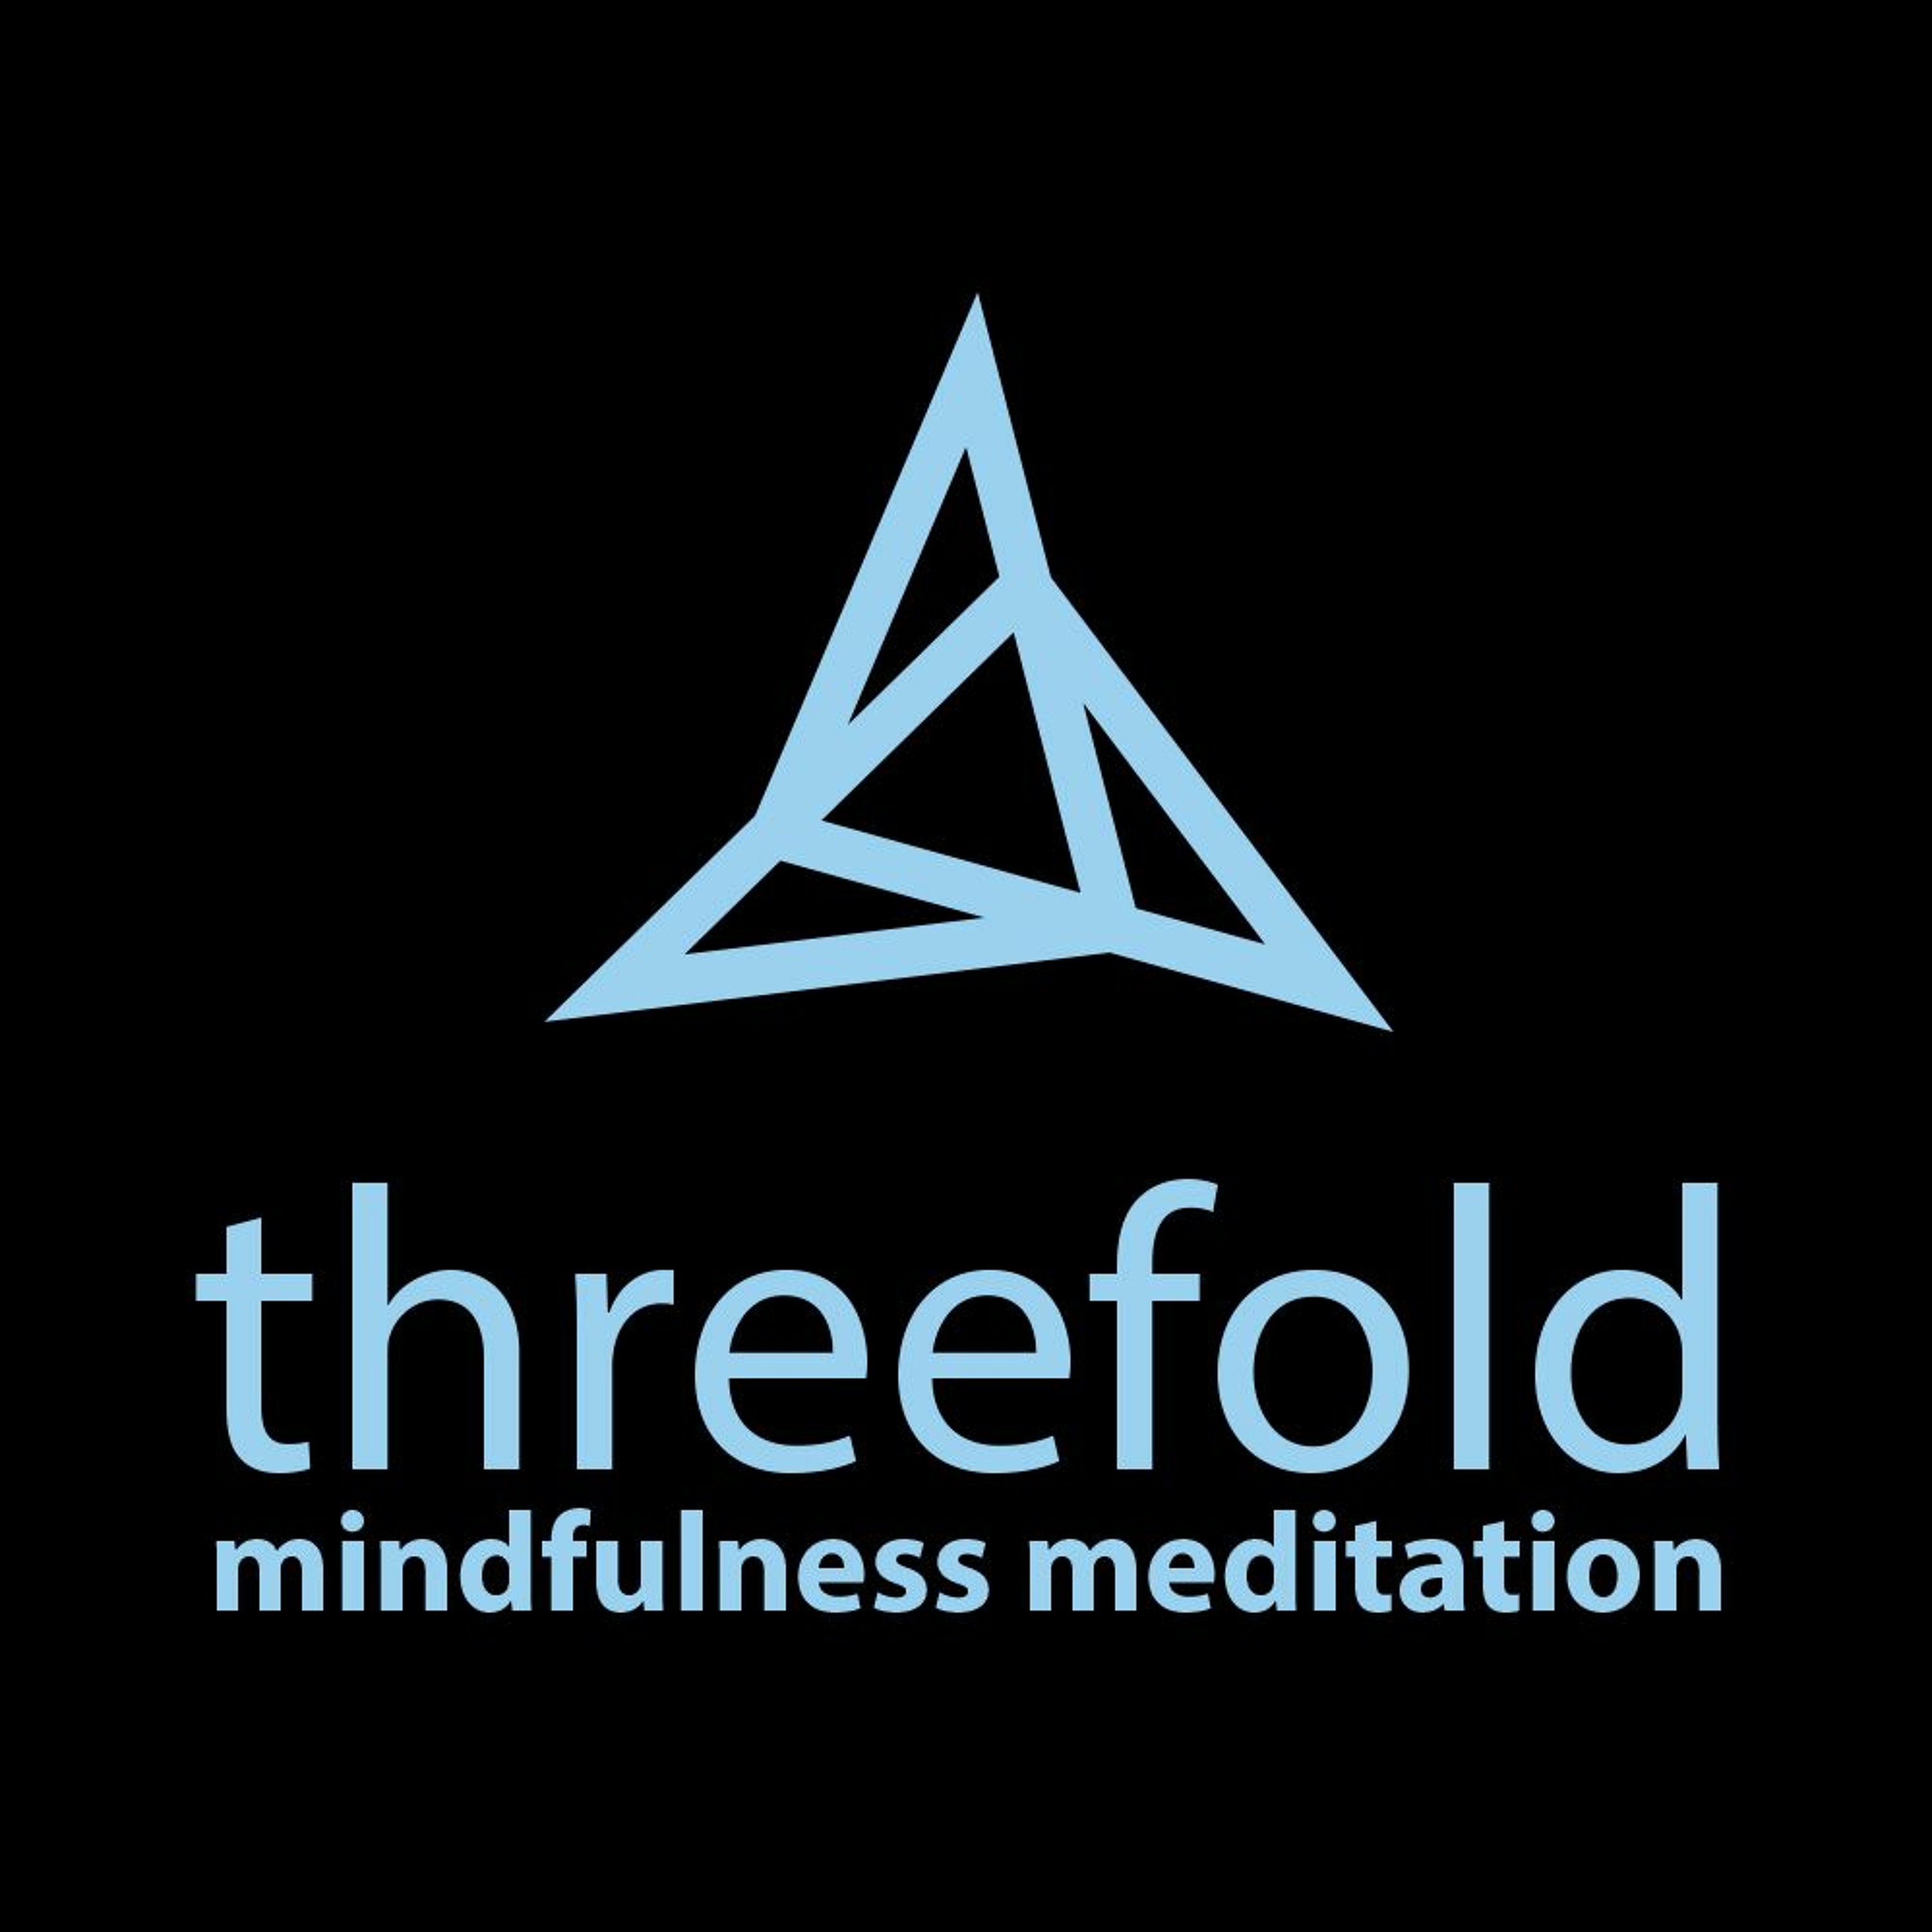 32 - How To Meditate (Threefold Mindfulness Meditation)